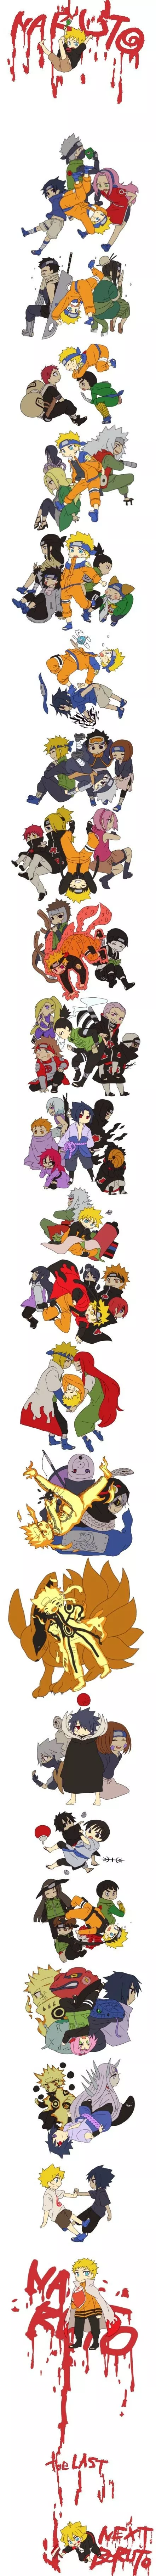 Evolucion chibi de Naruto